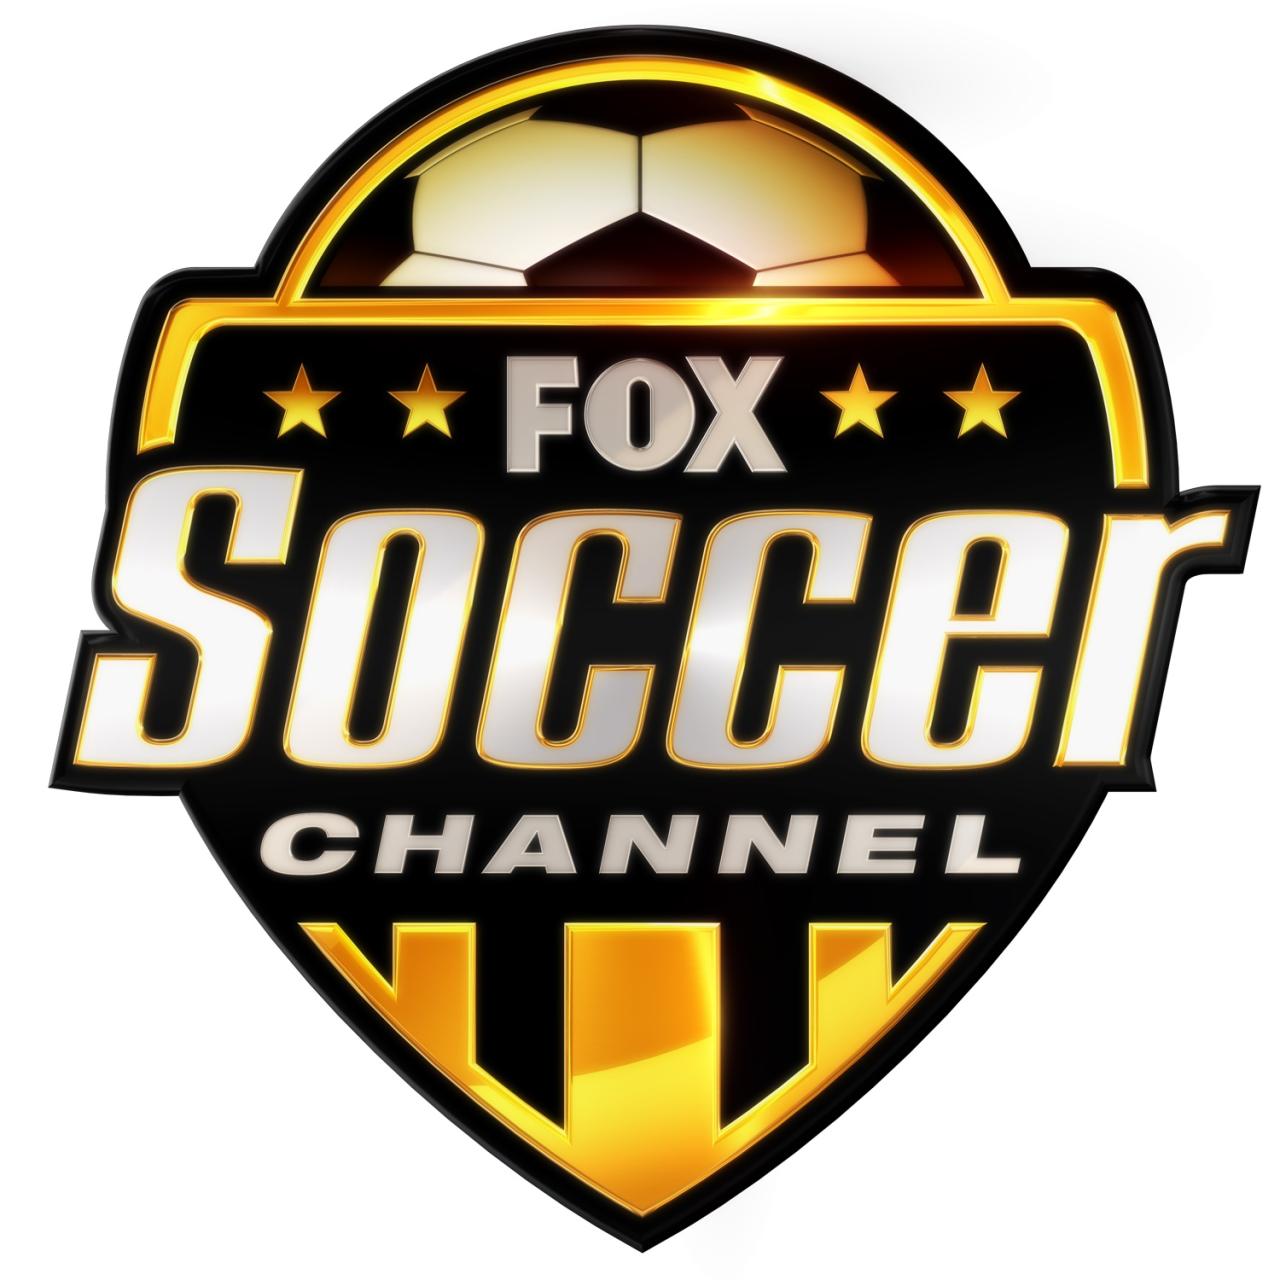 Soccer Channel